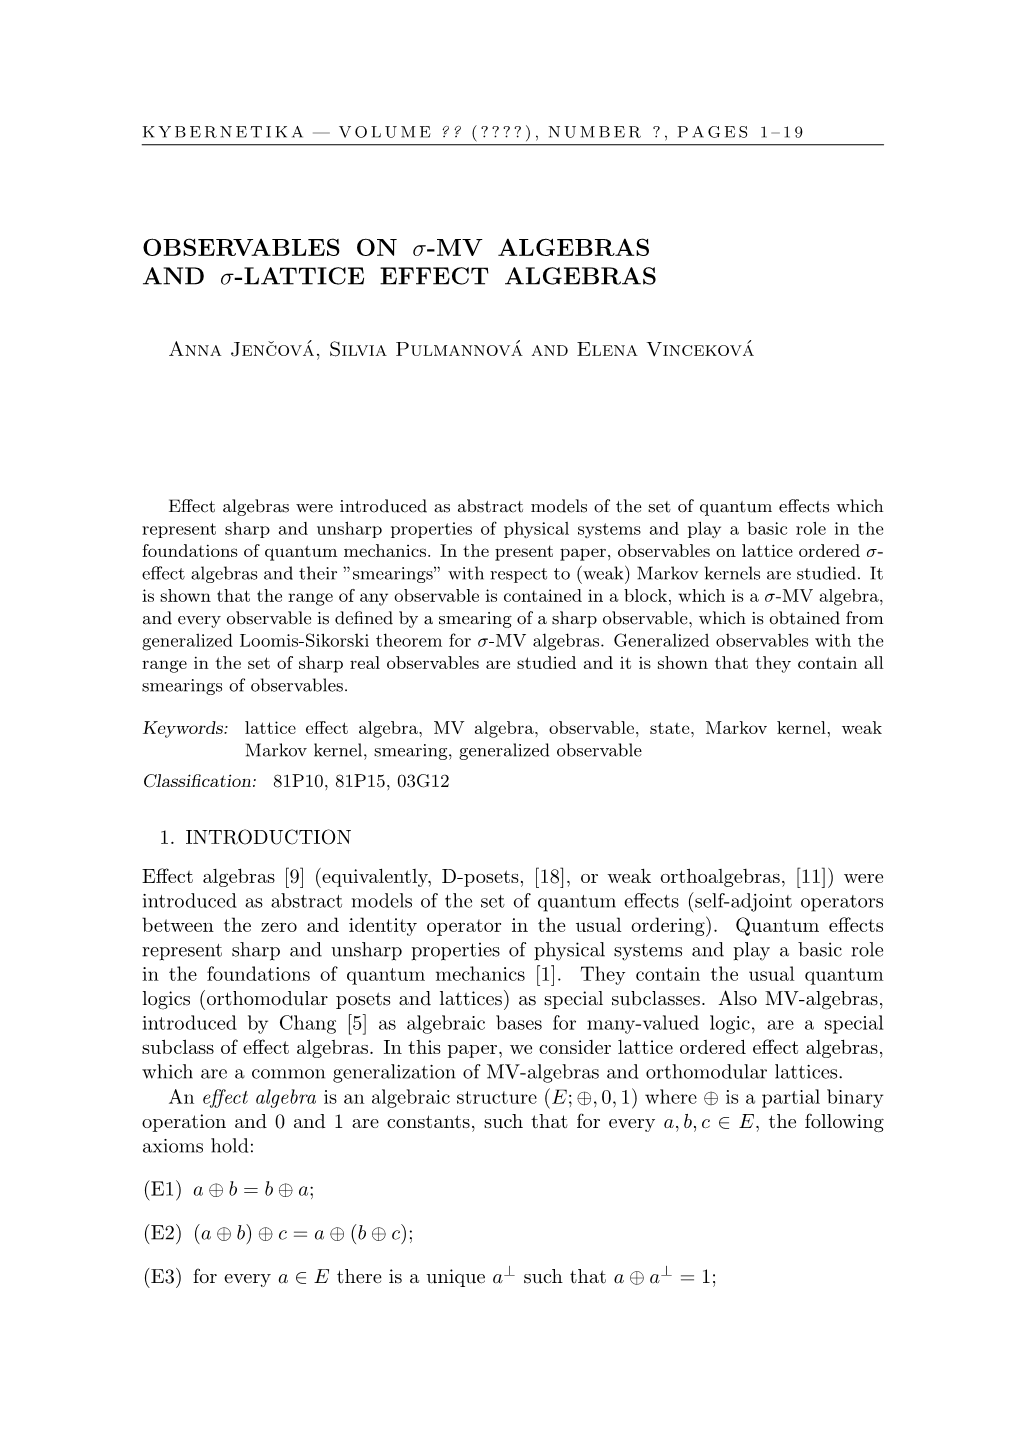 Observables on -MV Algebras and -Lattice Effect Algebras